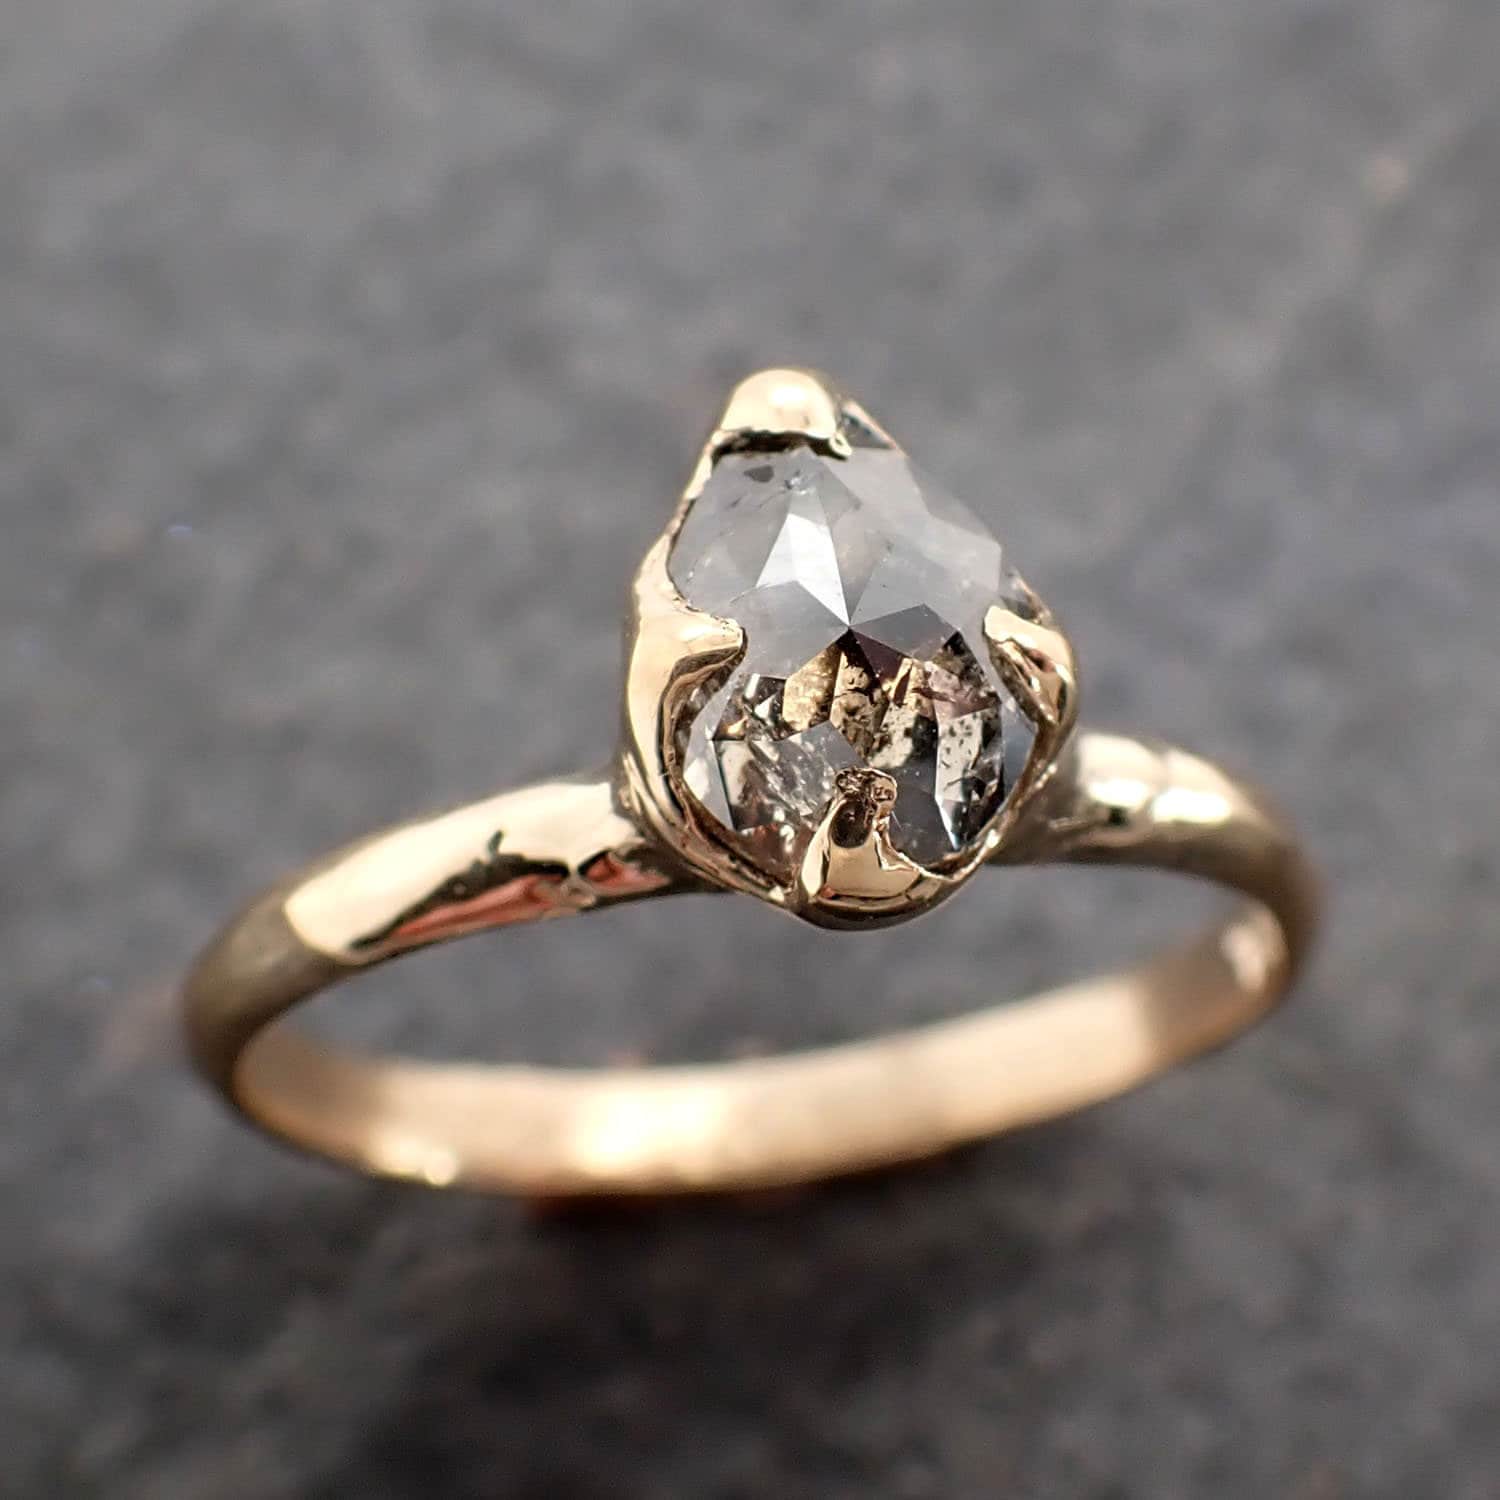 Fancy cut salt and pepper Diamond Solitaire Engagement 14k yellow Gold Wedding Ring Diamond Ring byAngeline 2611